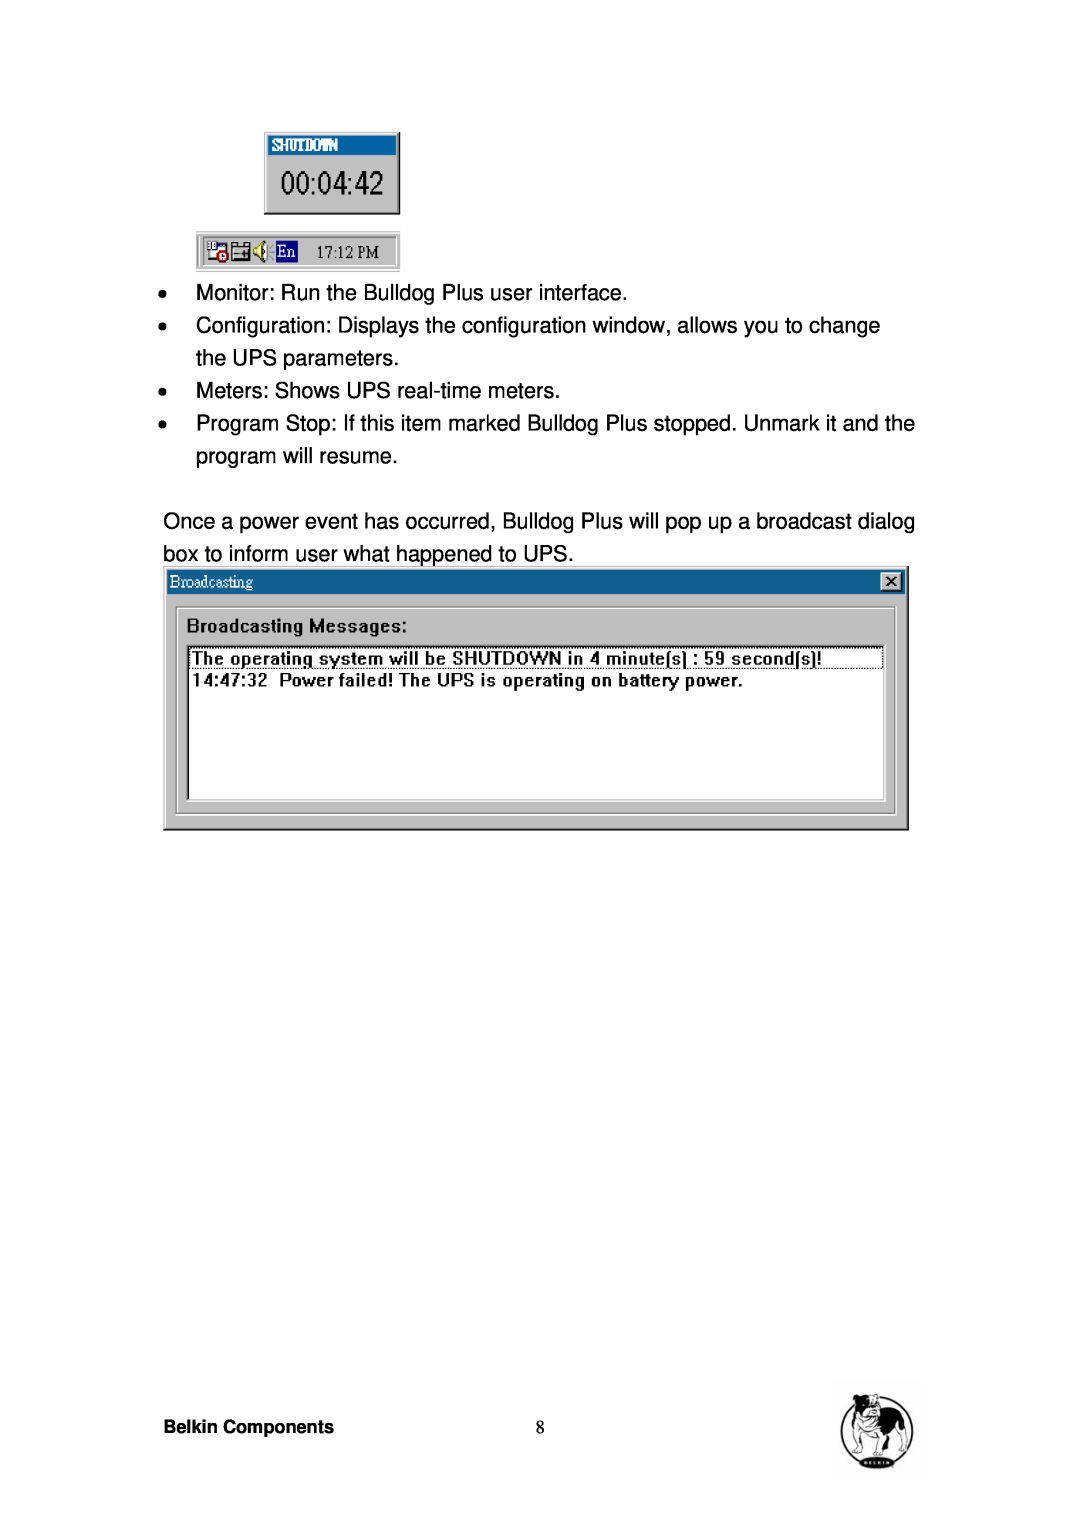 Belkin belkin bulldog plus- shutdown management software for windows Monitor Run the Bulldog Plus user interface 